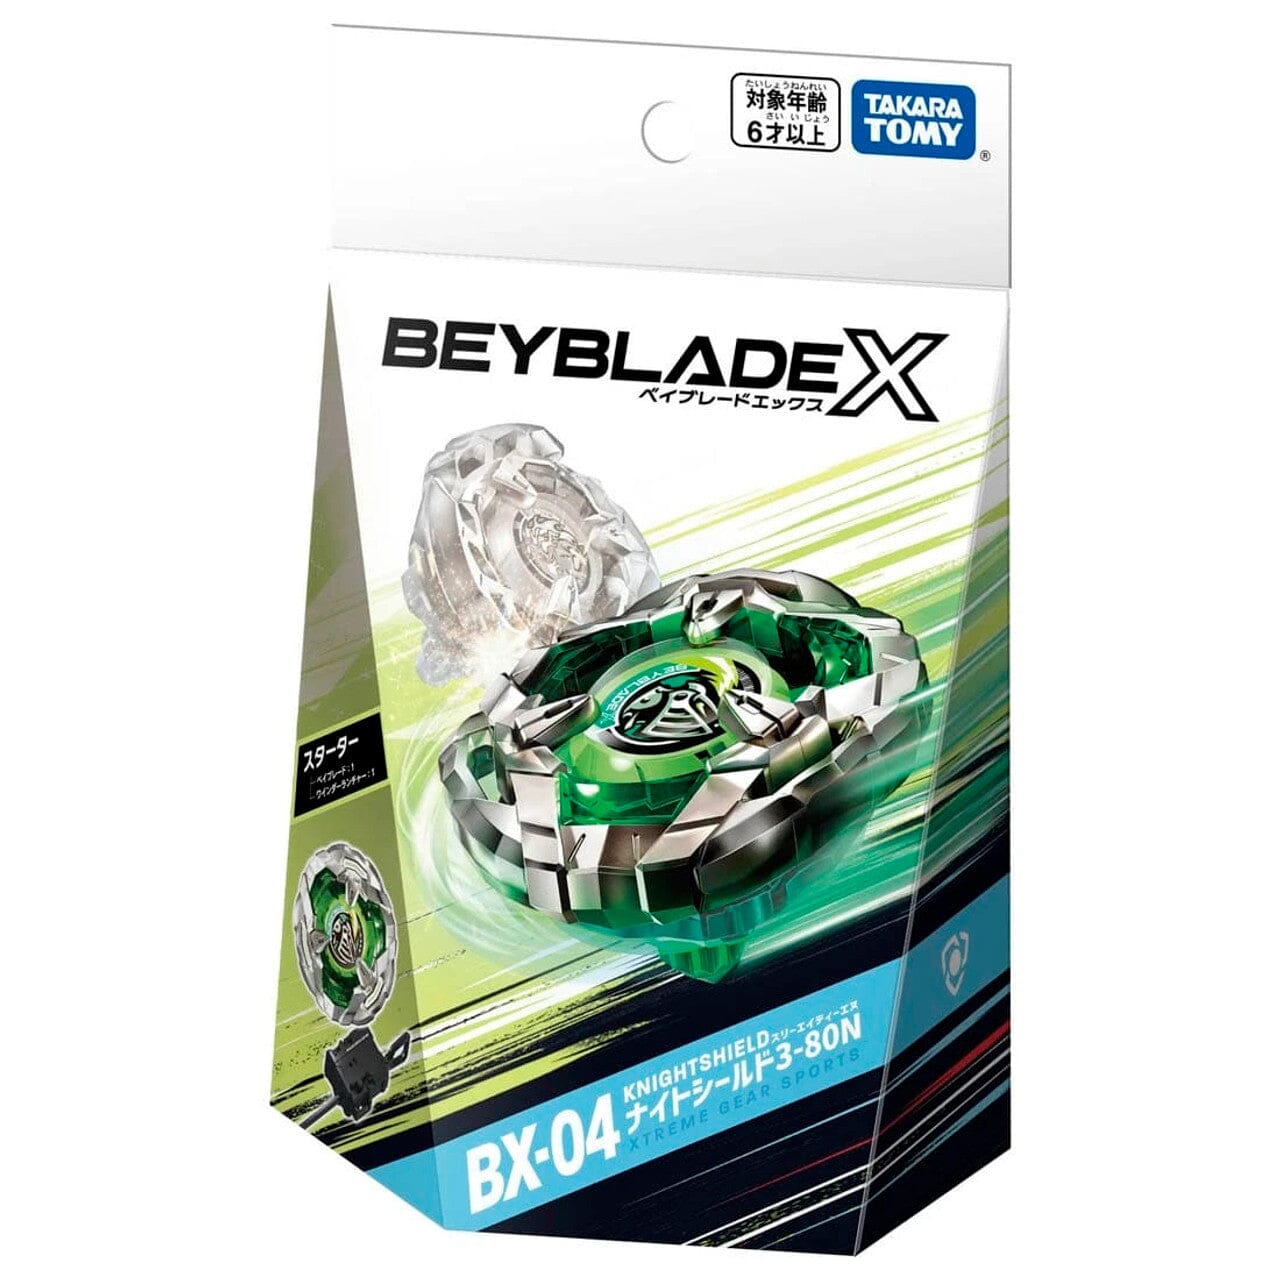 [PRE-ORDER JULY 21] Beyblade X BX-04 Knight Sheild BGL Hobbies